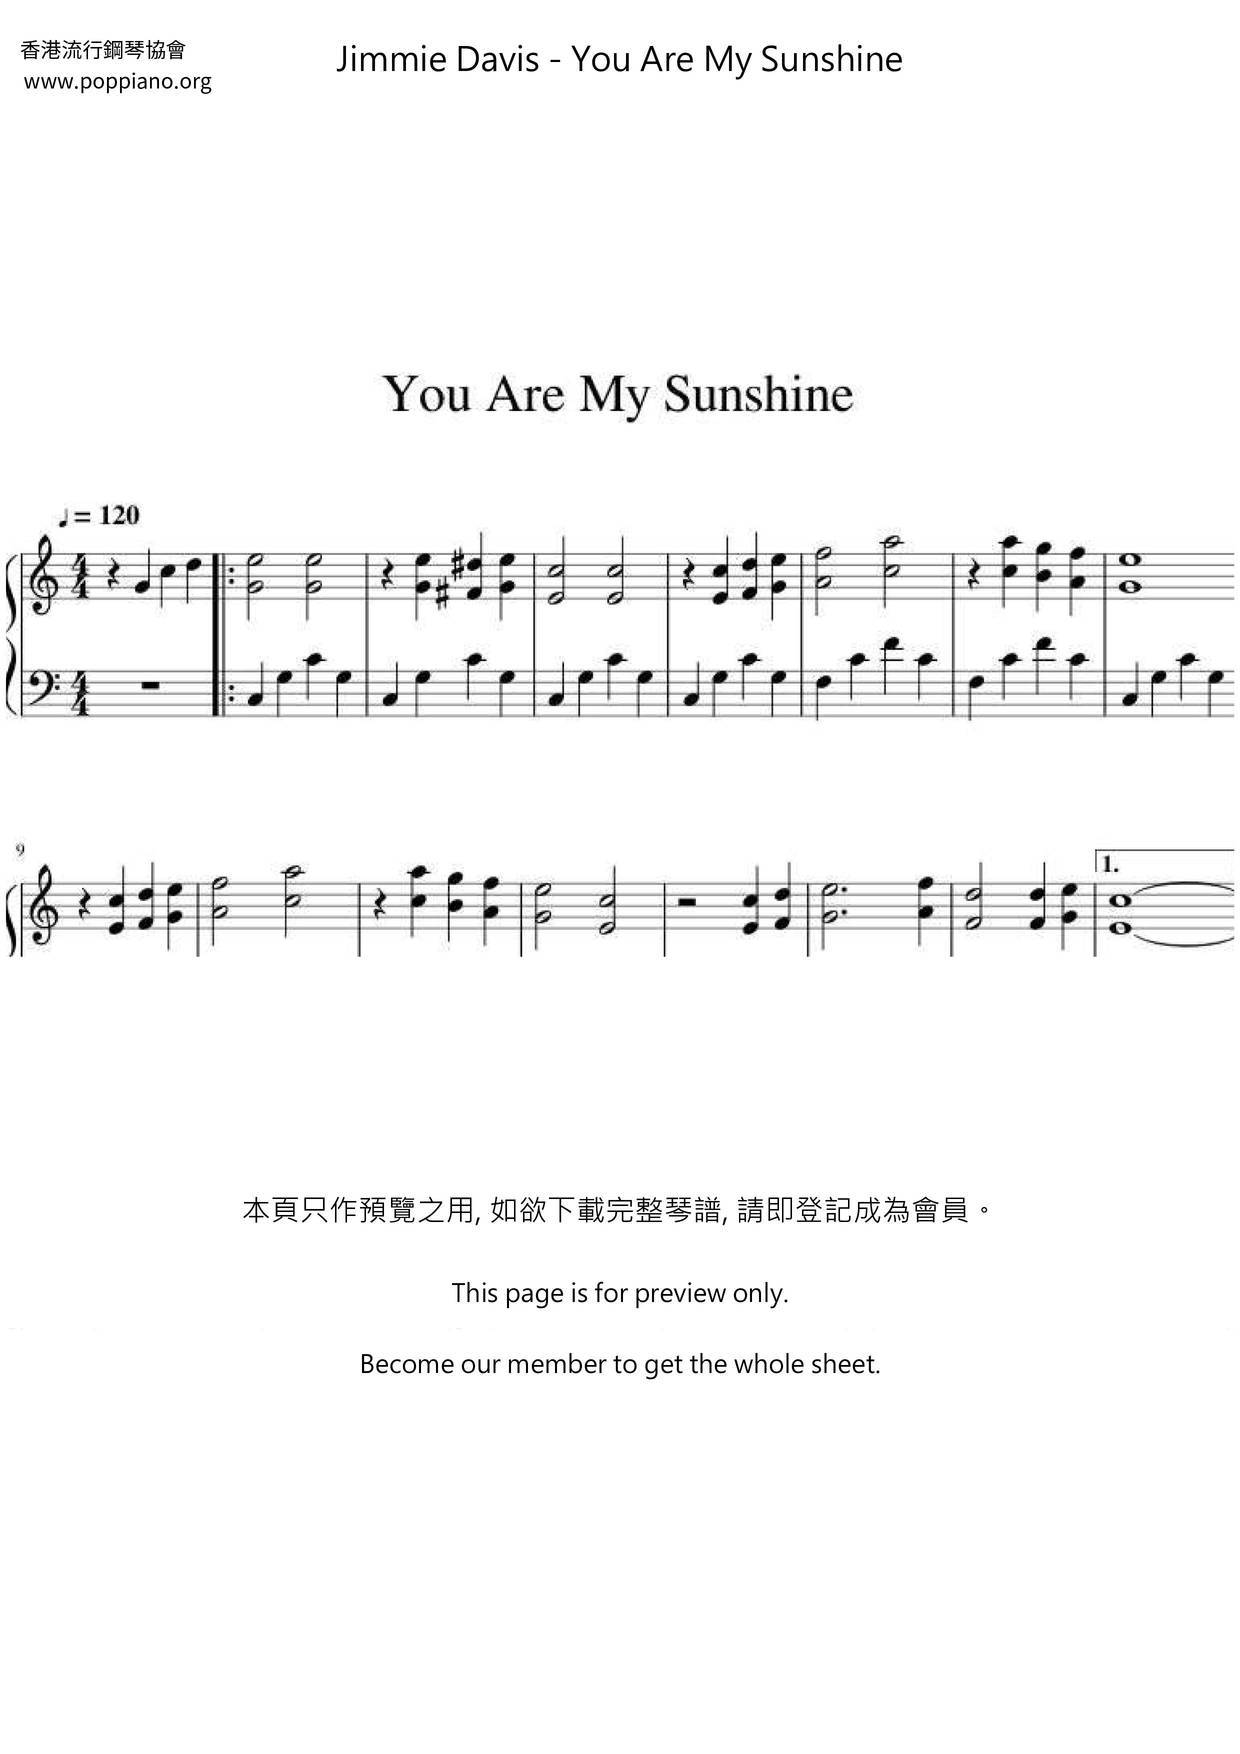 You Are My Sunshine Score